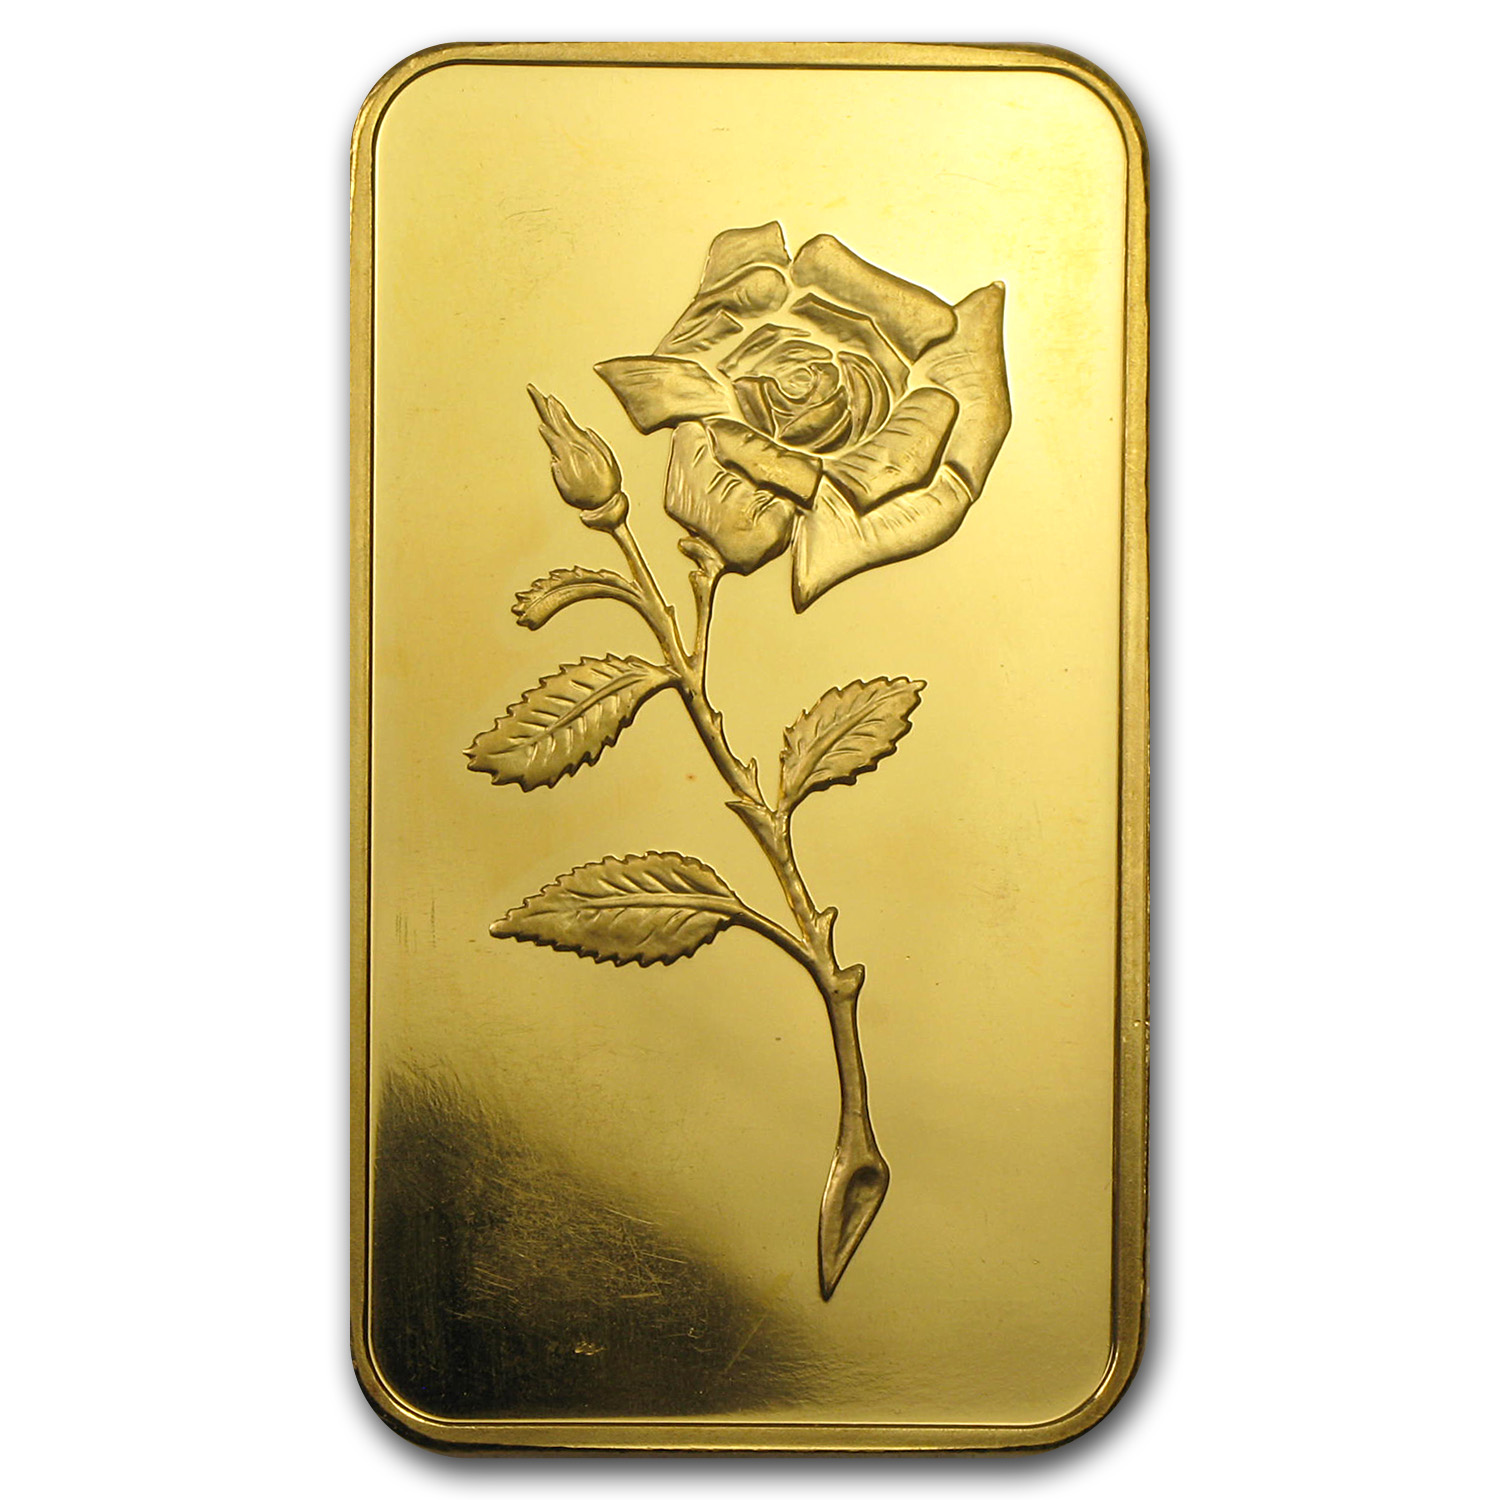 credit suisse gold bar official site